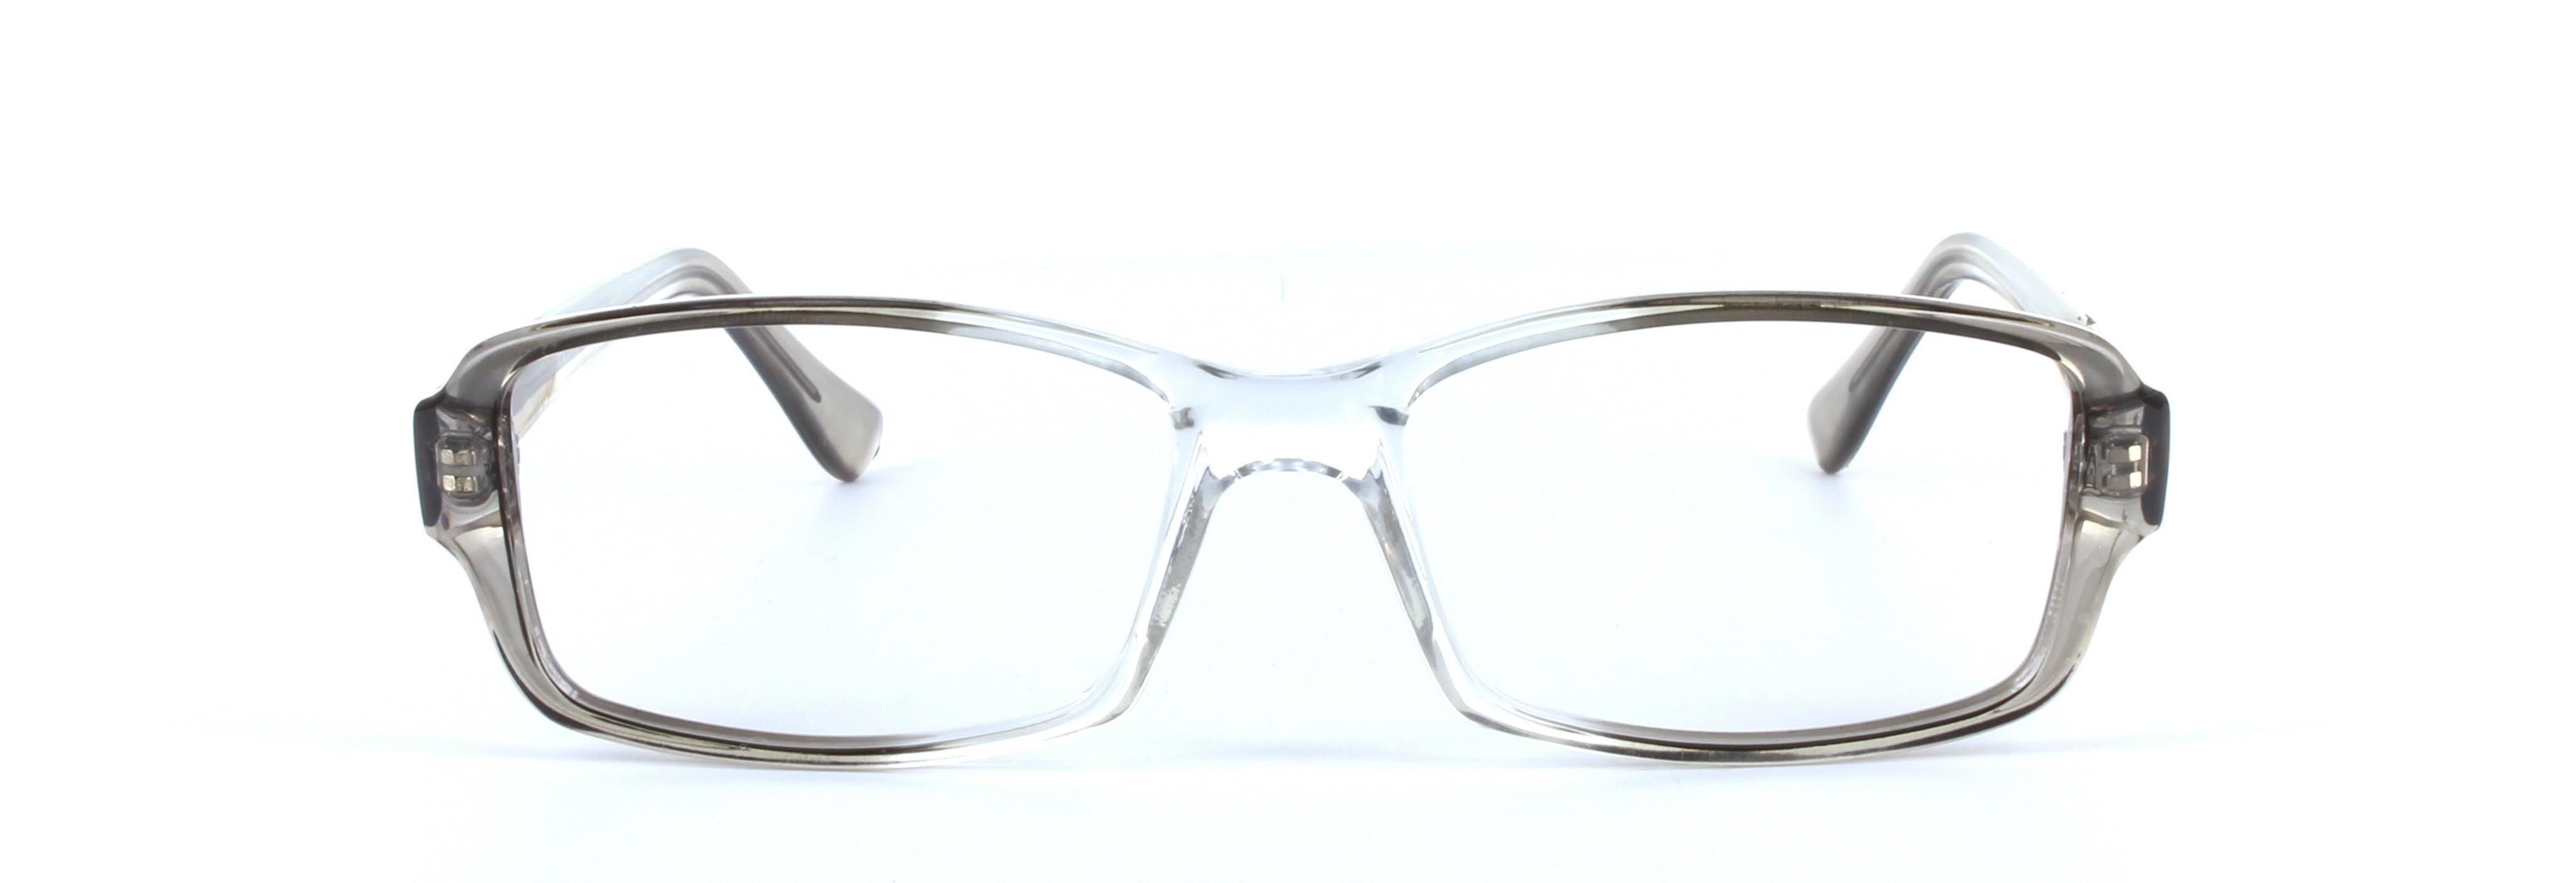 Grey Full Rim Rectangular Plastic Glasses Chico - Image View 5